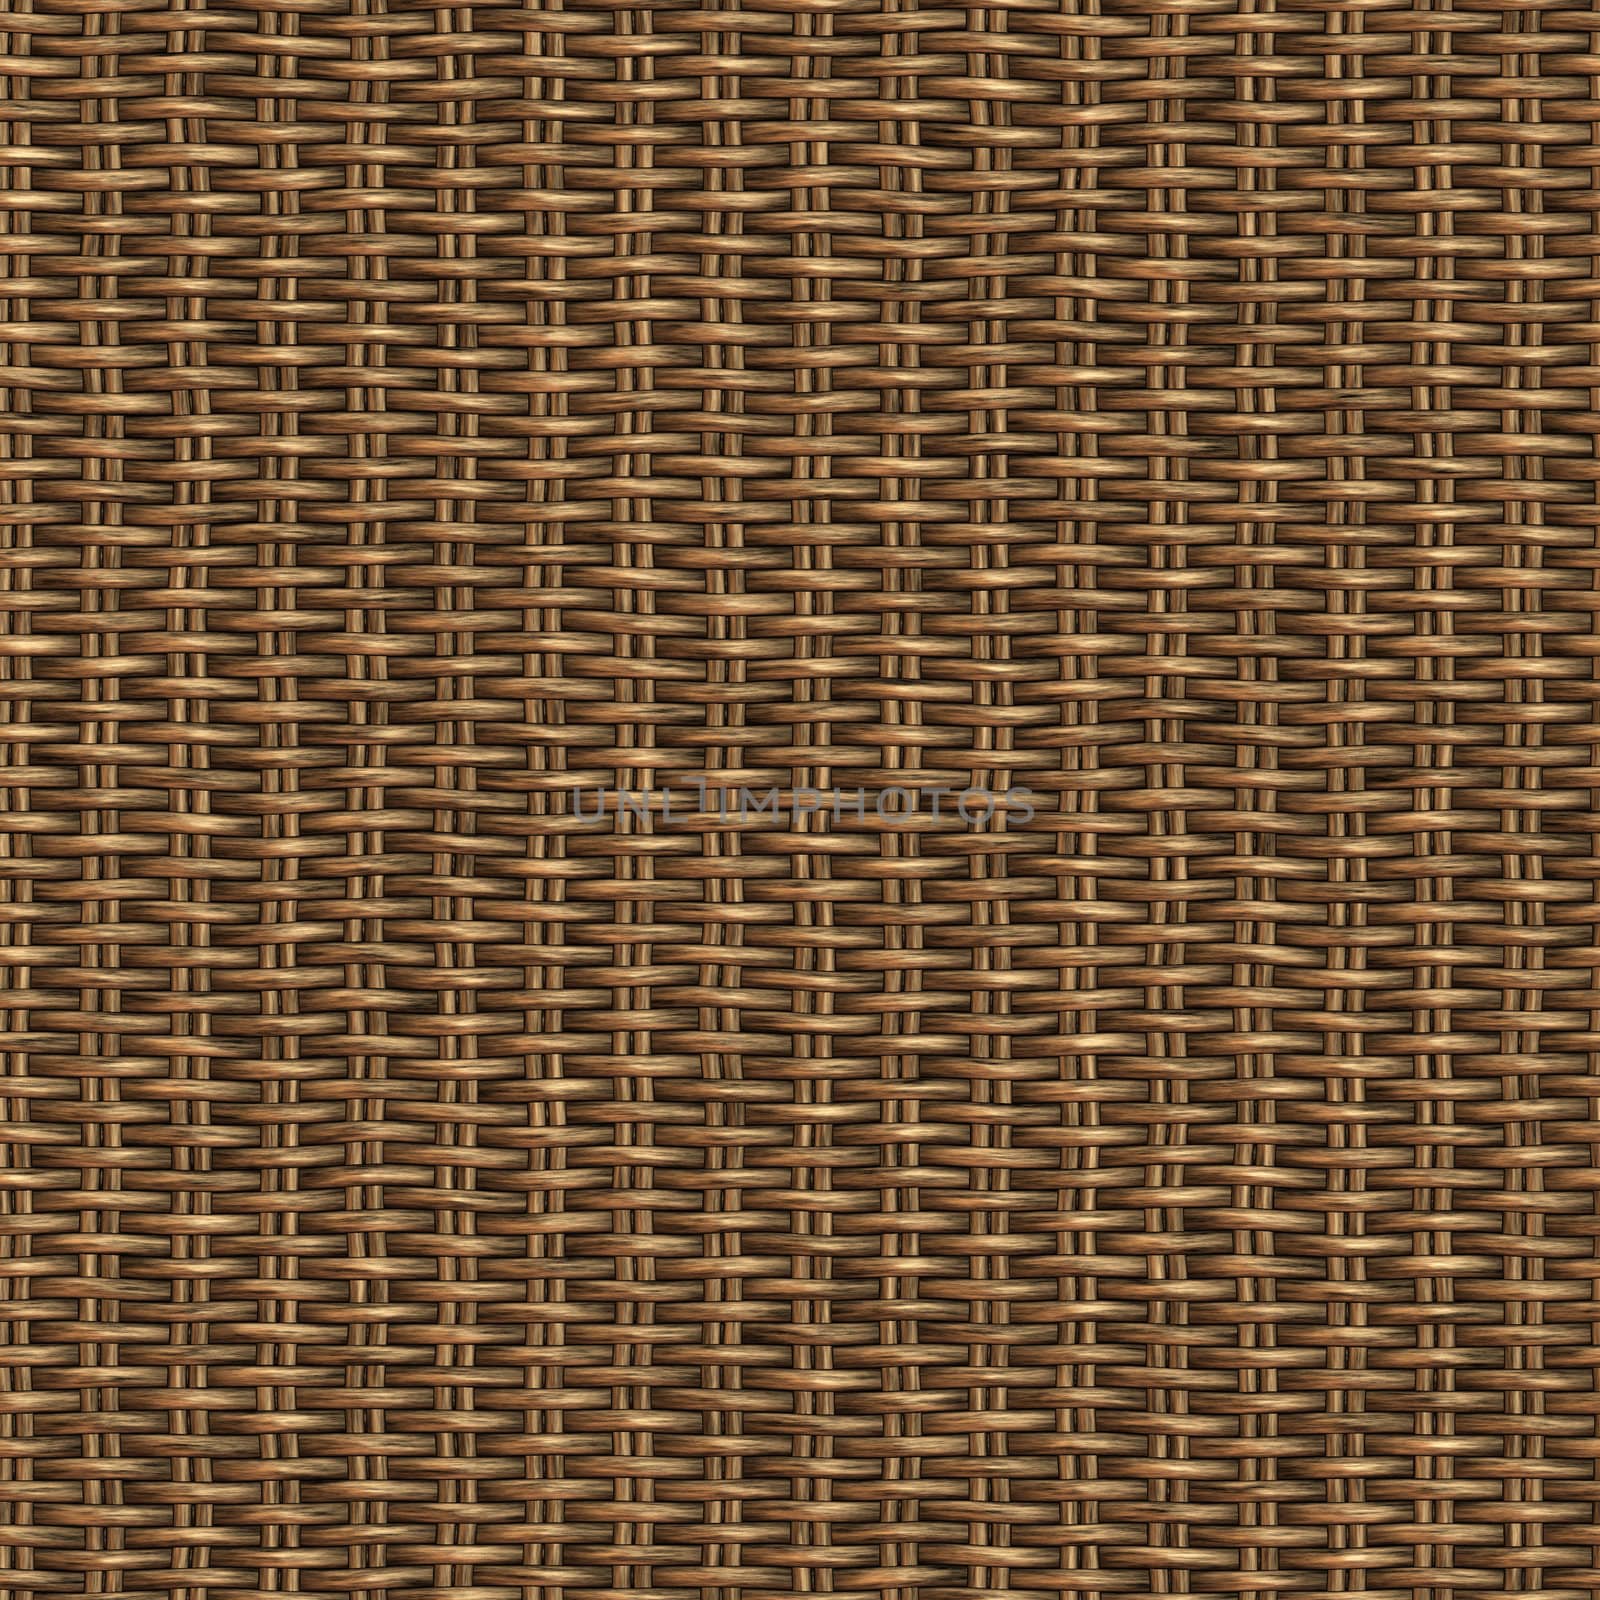 Basket Woven Seamless Pattern Illustration